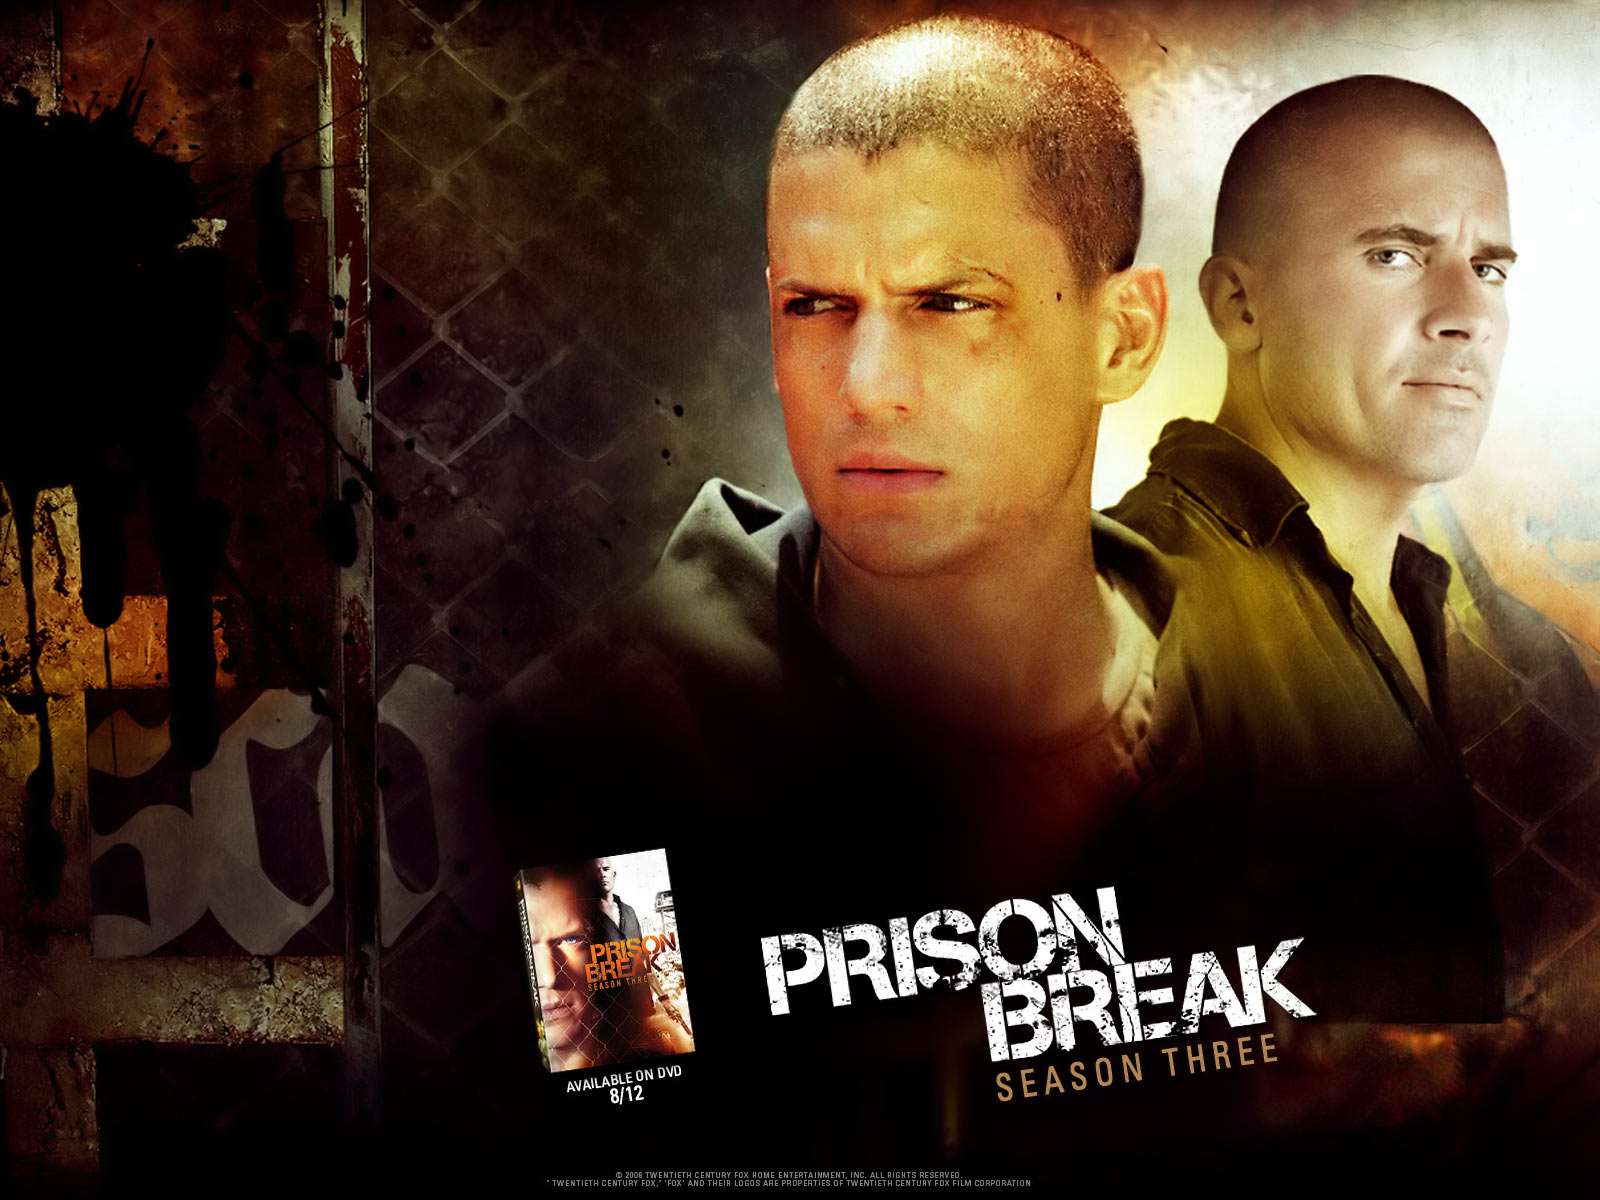 High Quality Prison Break Wallpapers1 - HD Wallpapers N